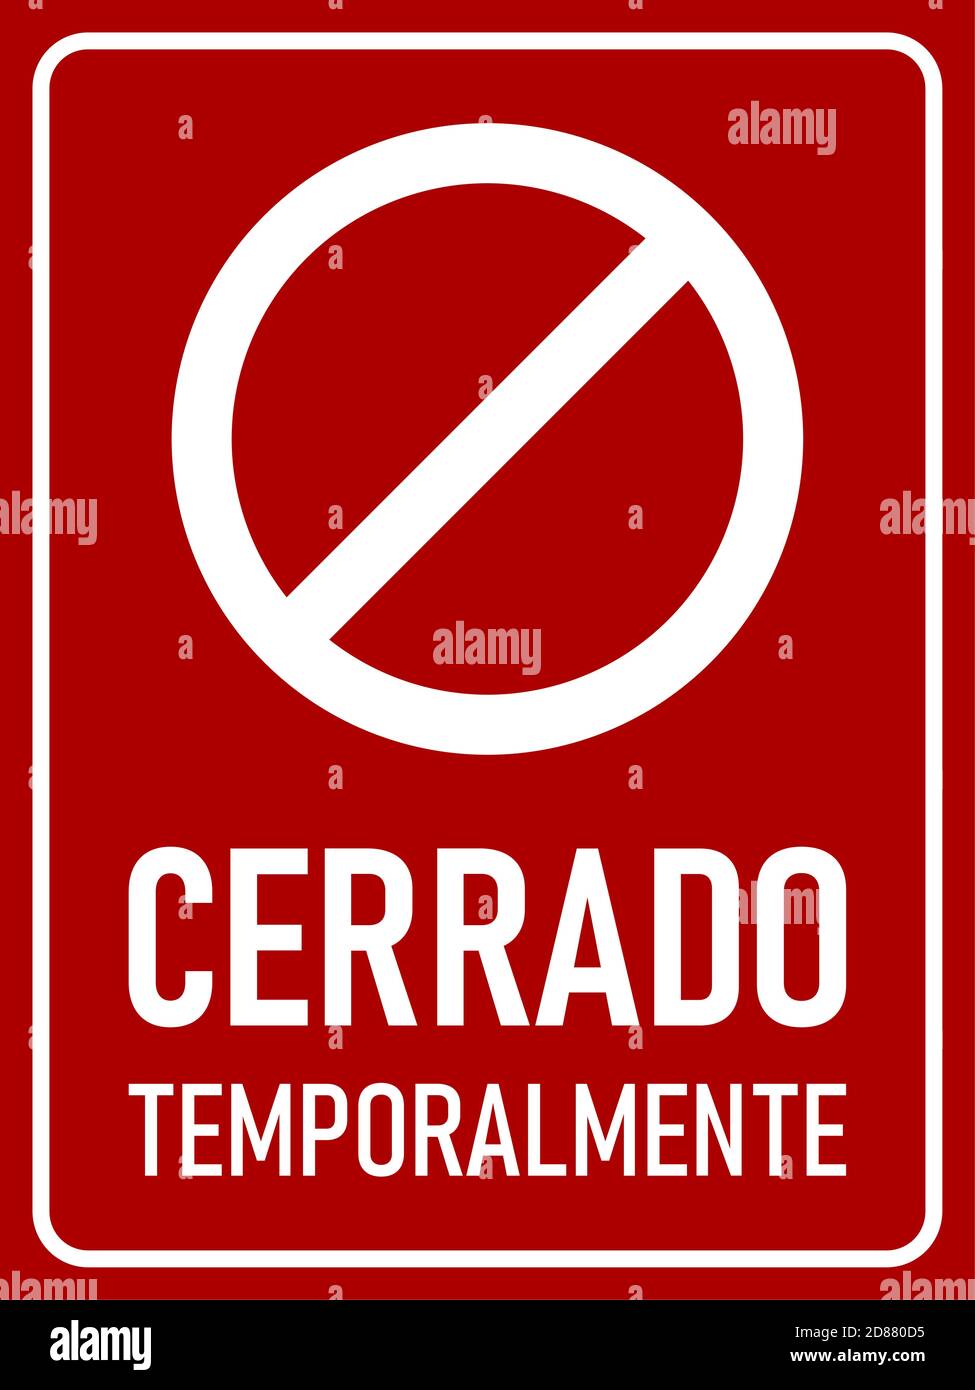 Cerrado Temporalmente ("Temporarily Closed" in Spanish) Vertical Warning Icon Poster with an Aspect Ratio of 3:4. Vector Image. Stock Vector